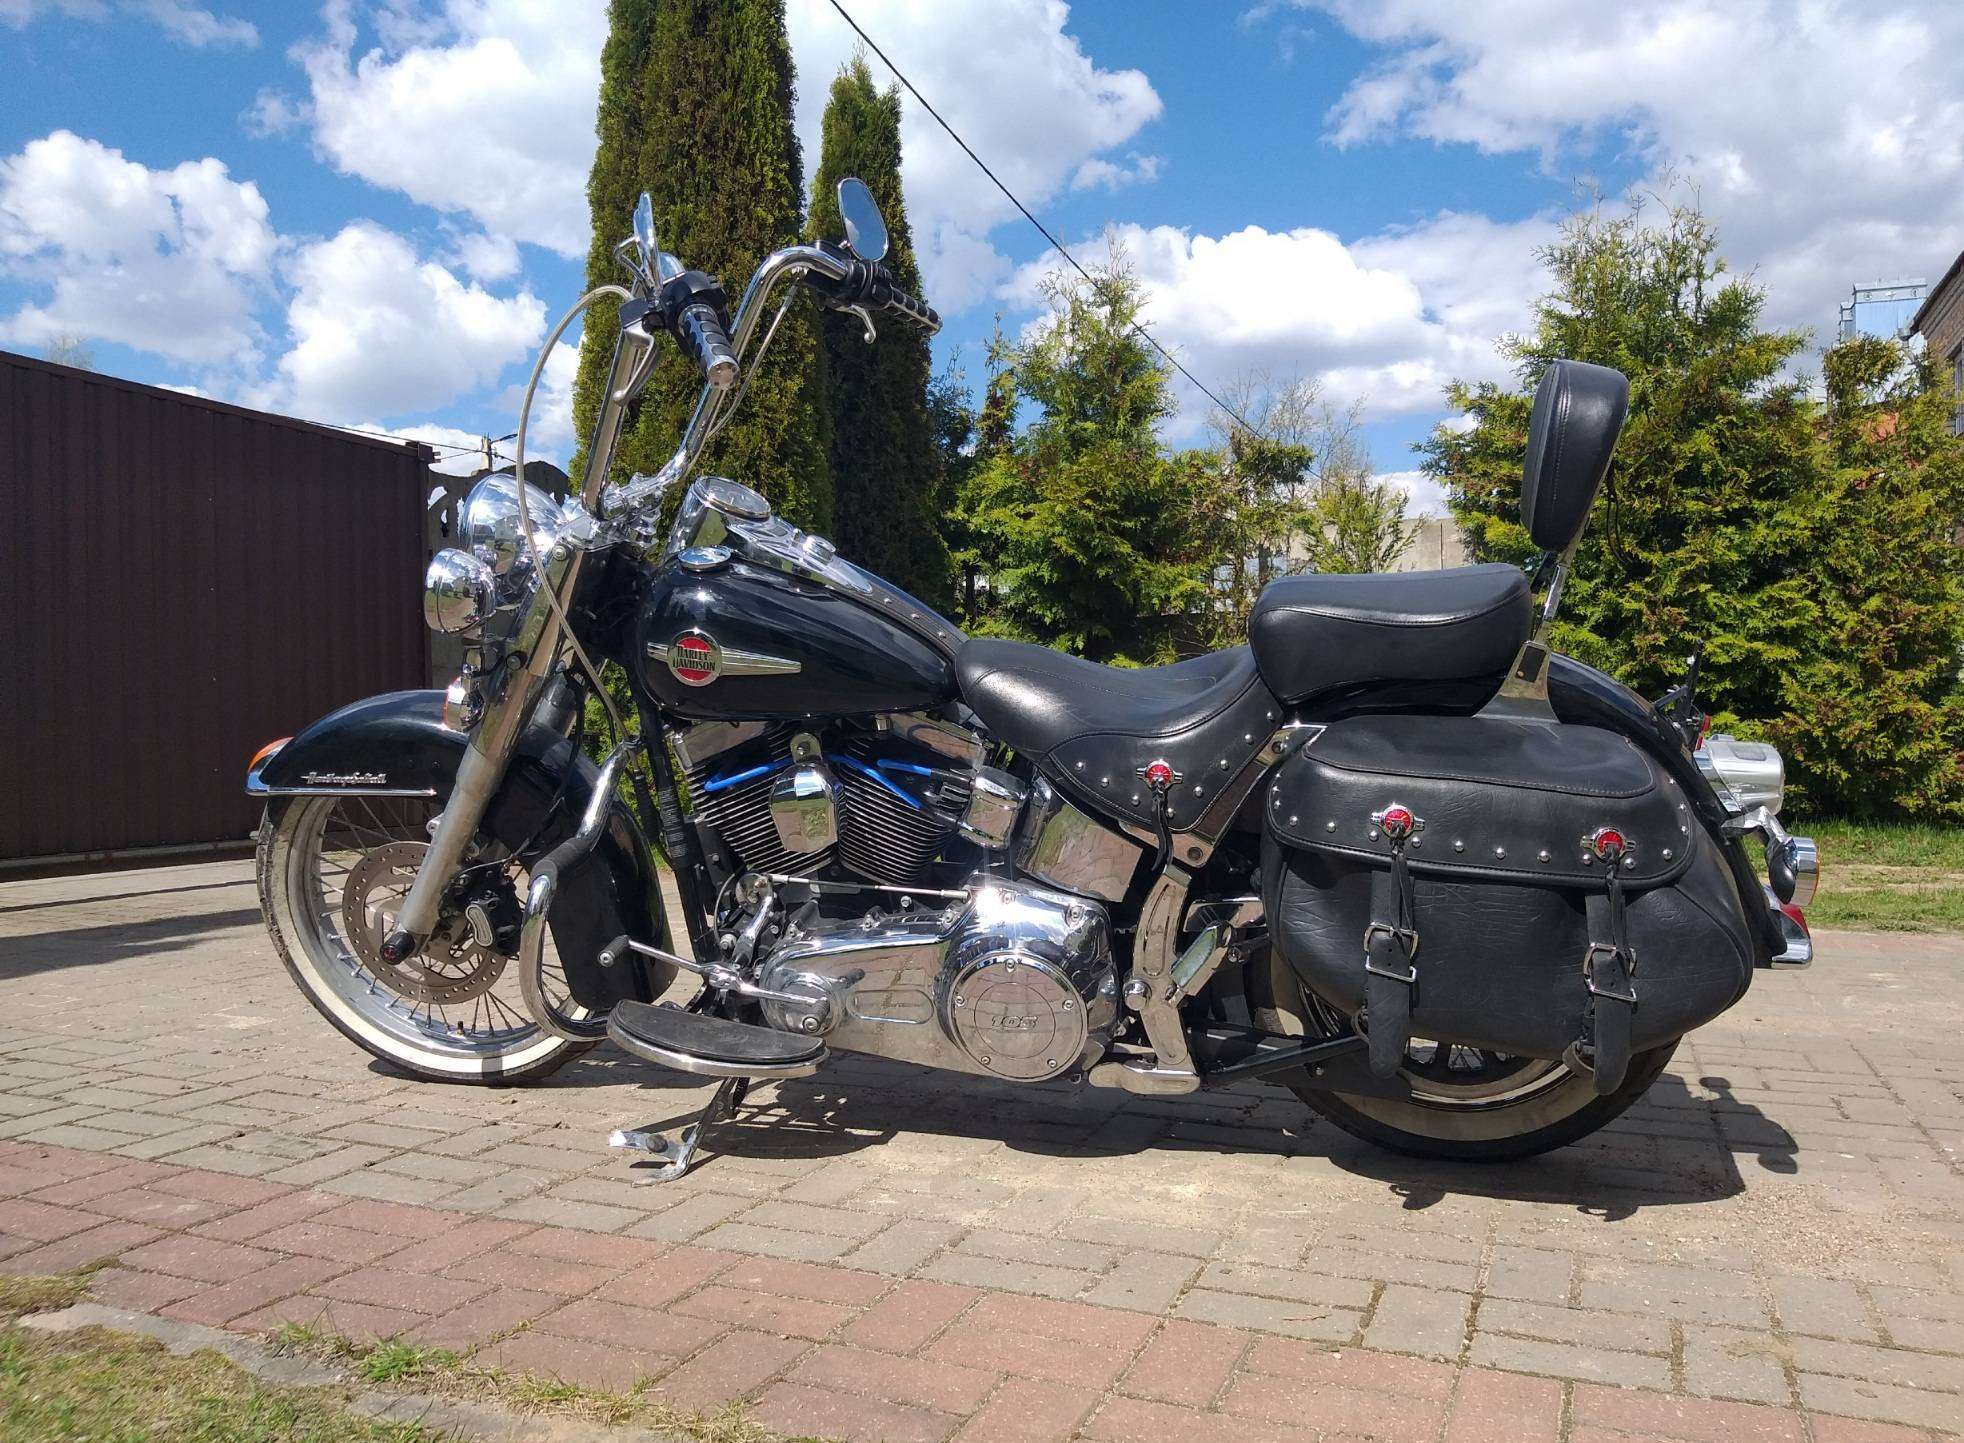 Купить мотоцикл Harley-Davidson Softail в Беларуси в кредит - цены, характеристики, фото. в Беларуси в кредит